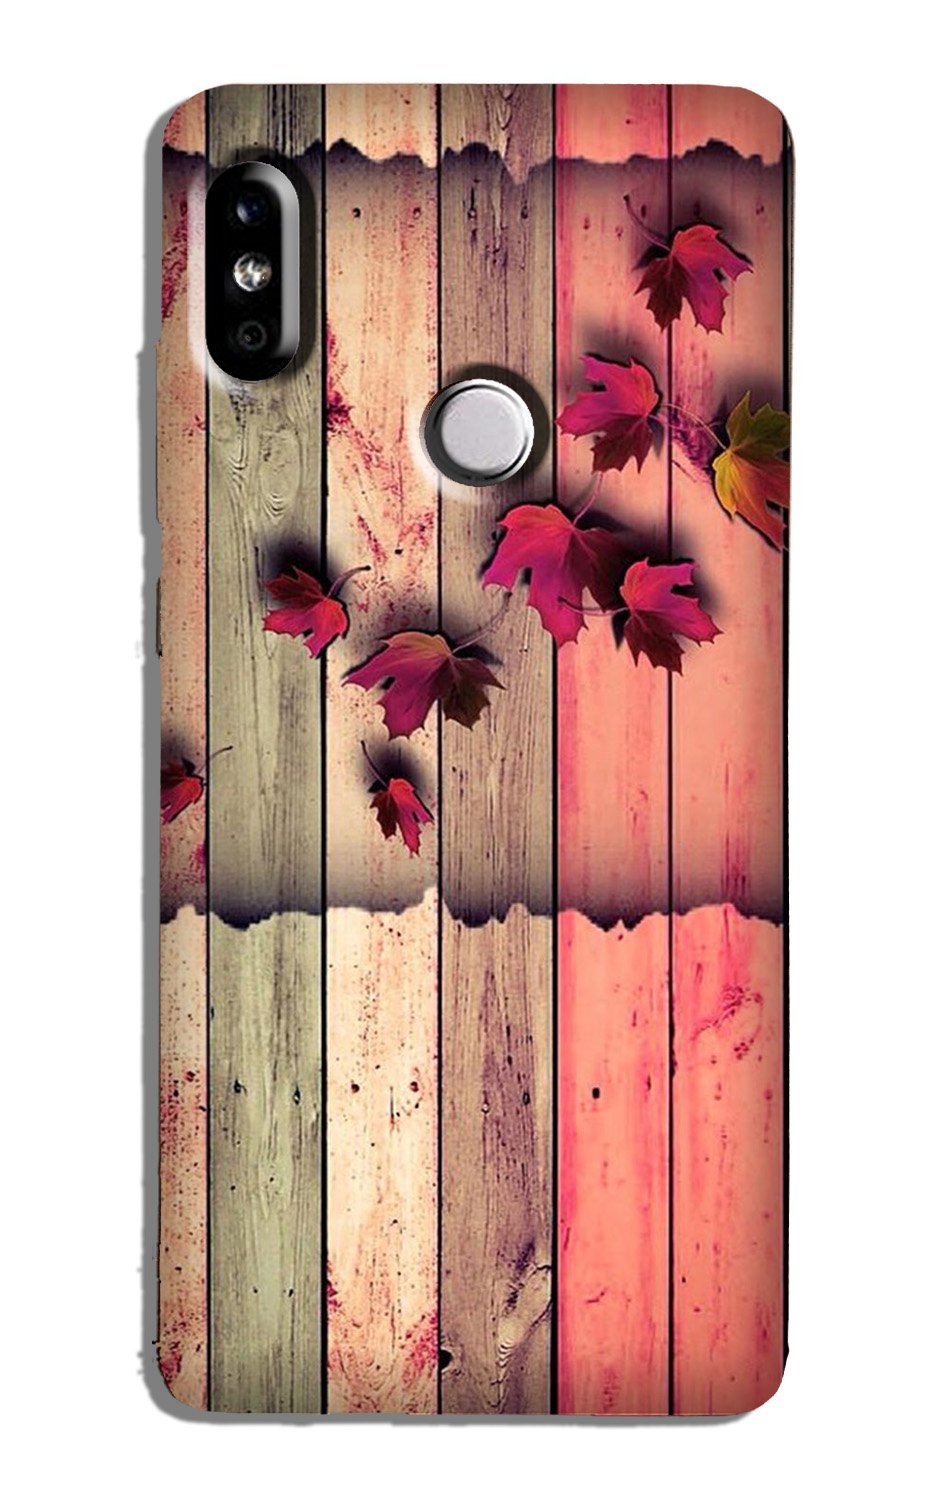 Wooden look2 Case for Xiaomi Redmi 7